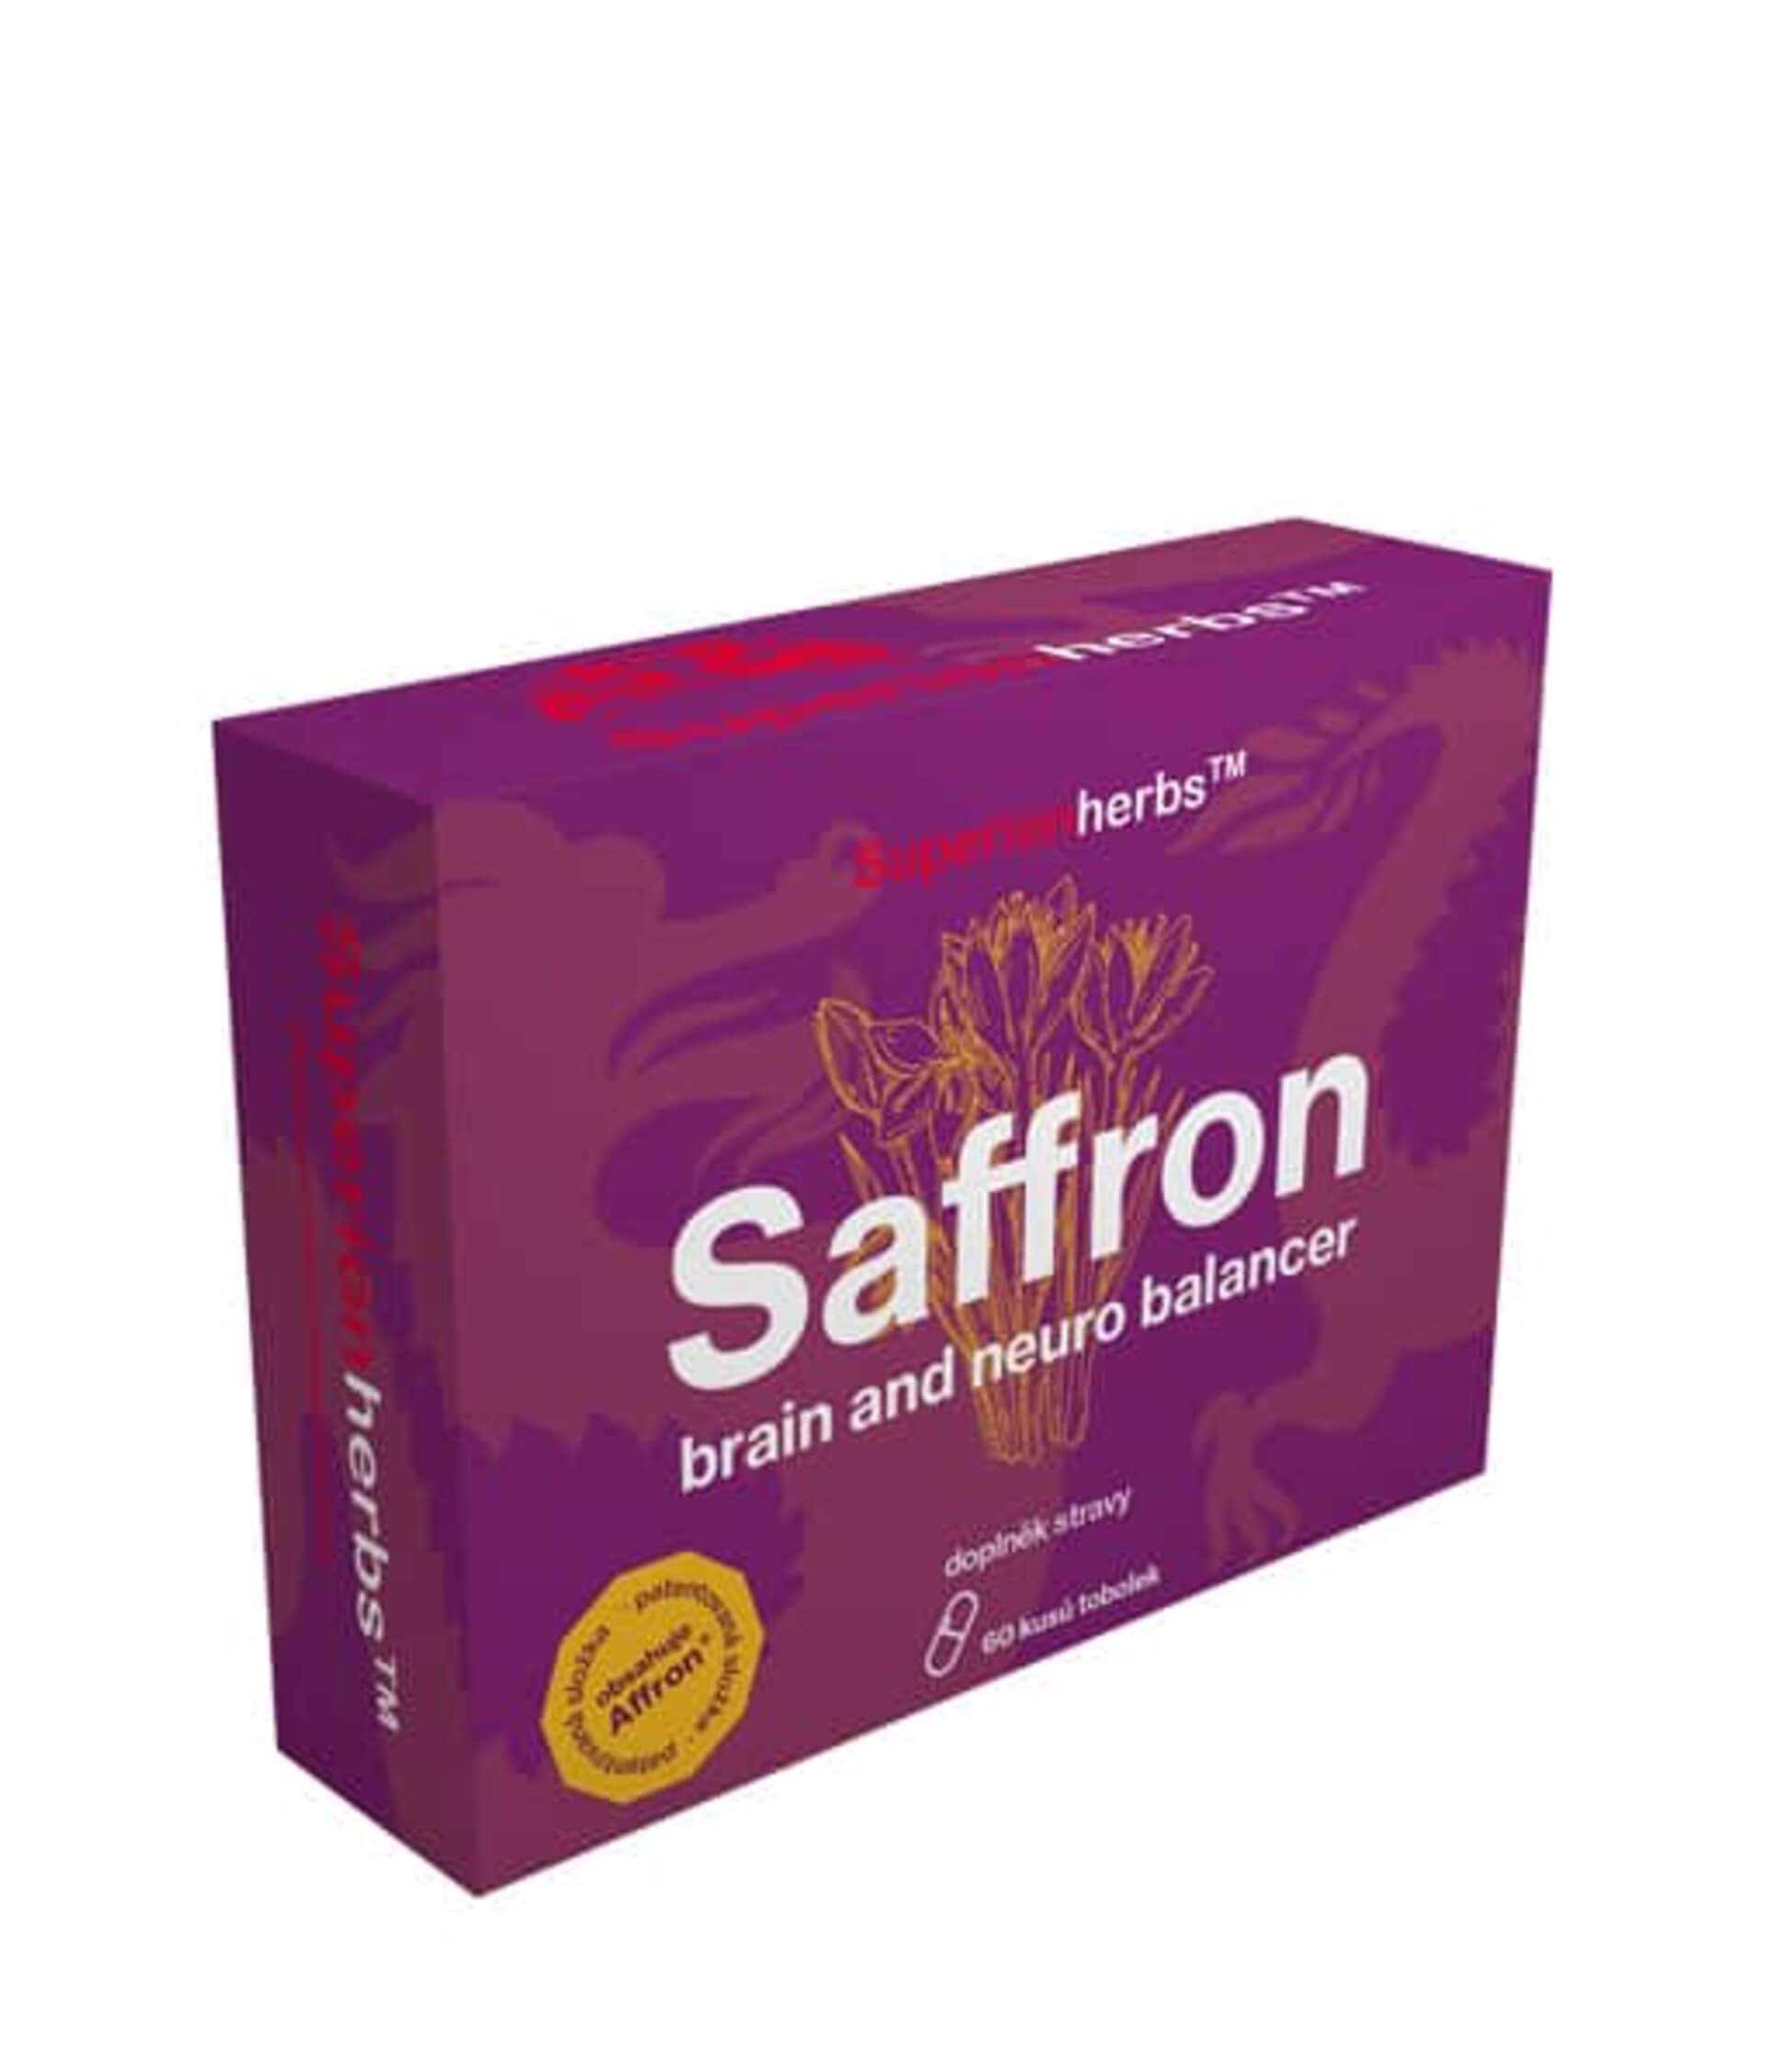 E-shop Superionherbs Saffron, brain and neuro balancer 60 kapslí